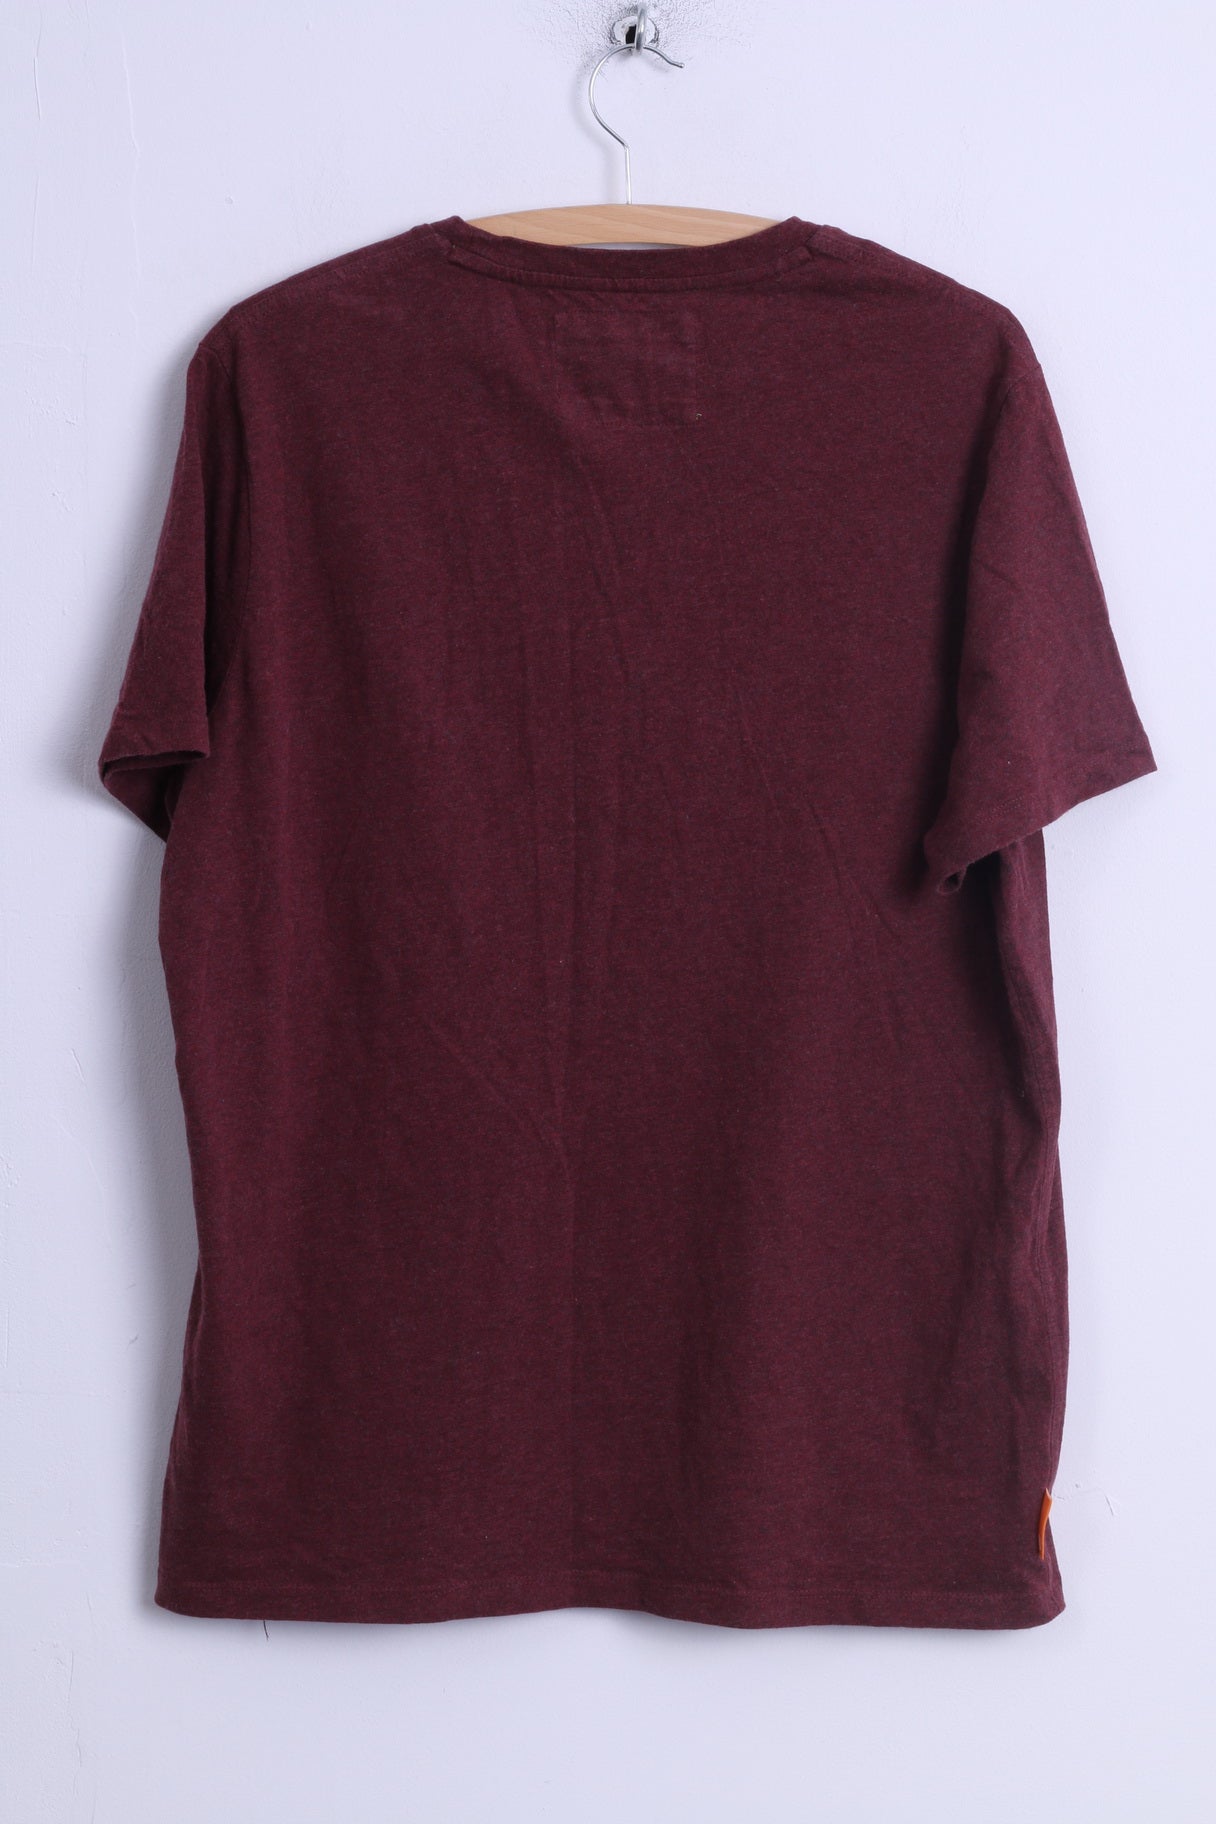 Superdry Mens XXL (L) T-Shirt Burgundy Cotton Crew Neck Japan Vintage Shirt